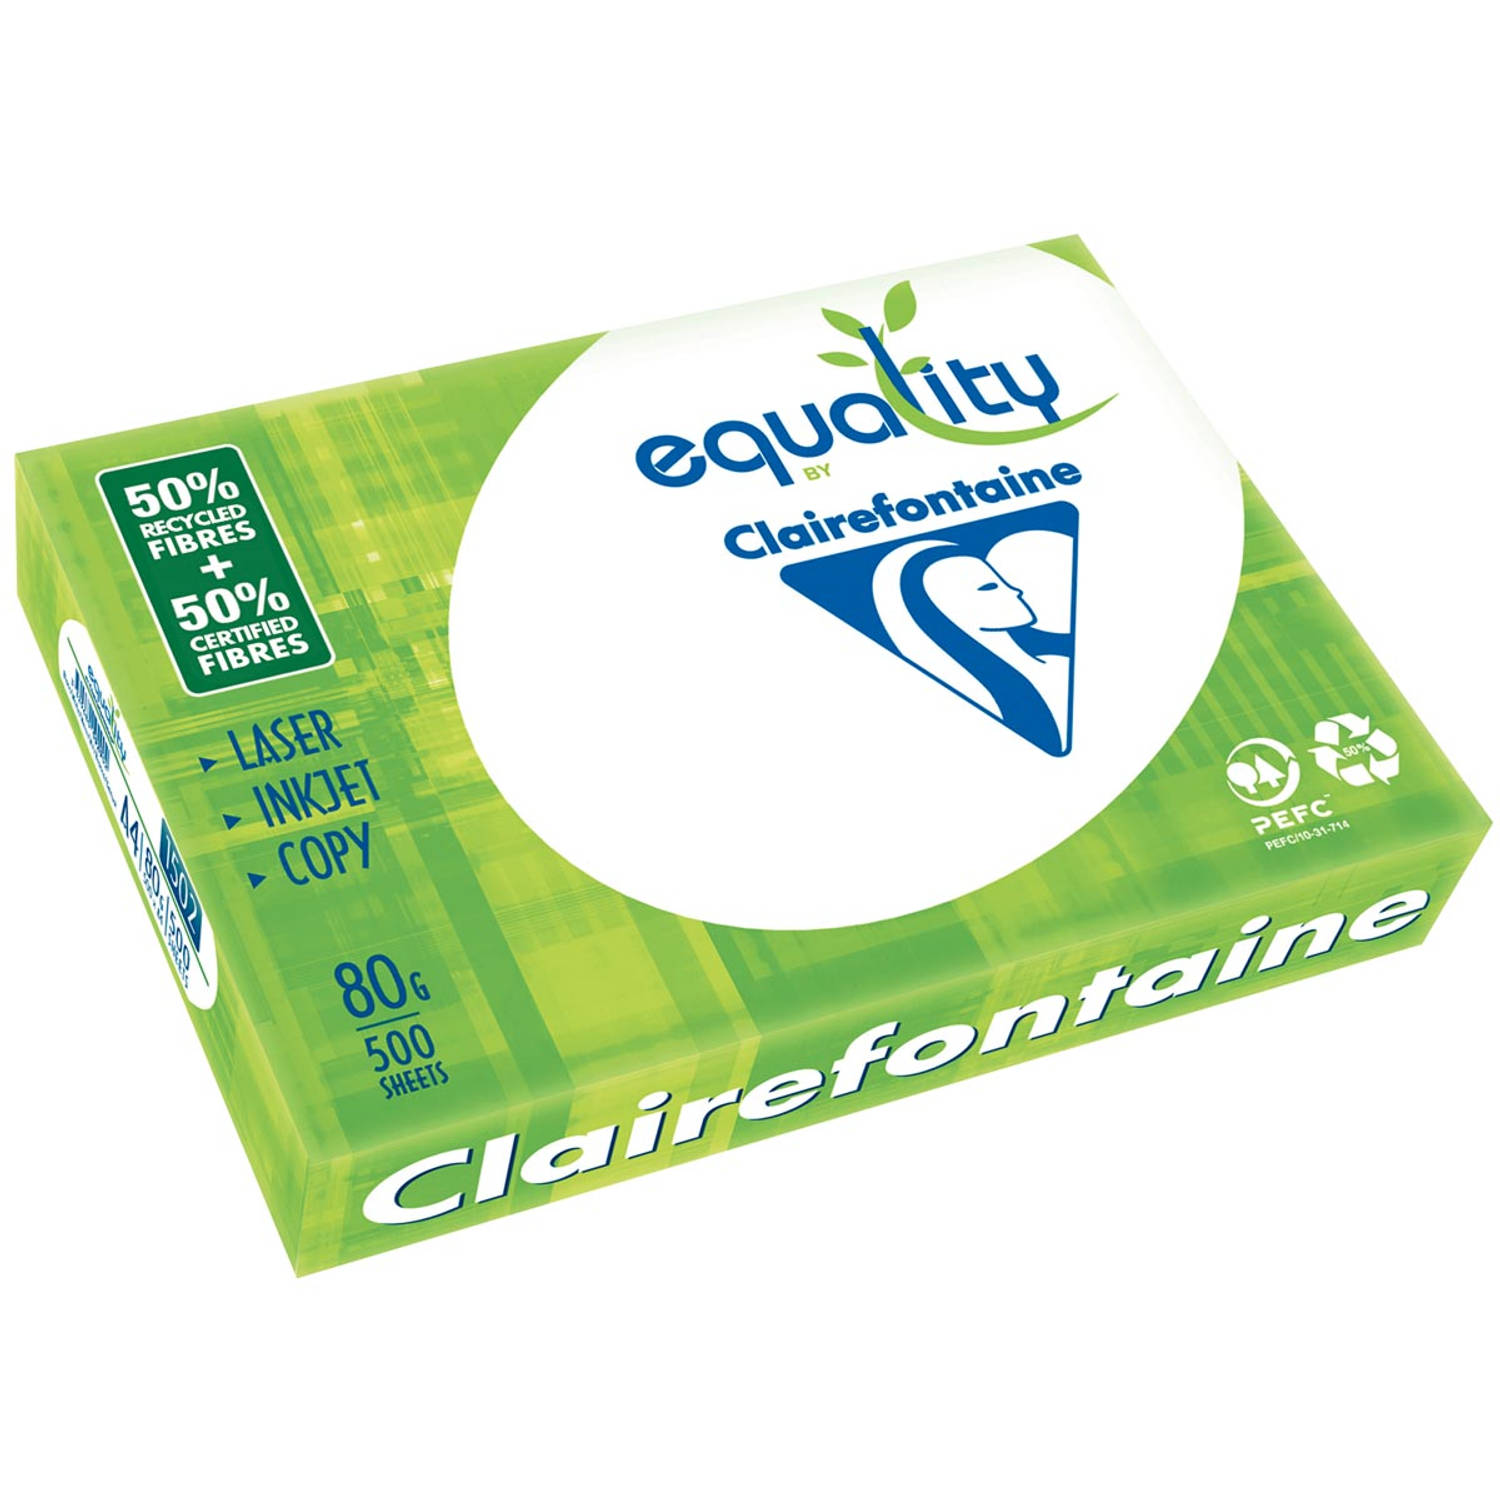 Clairefontaine Equality printpapier ft A4, 80 g, pak van 500 vel 5 stuks